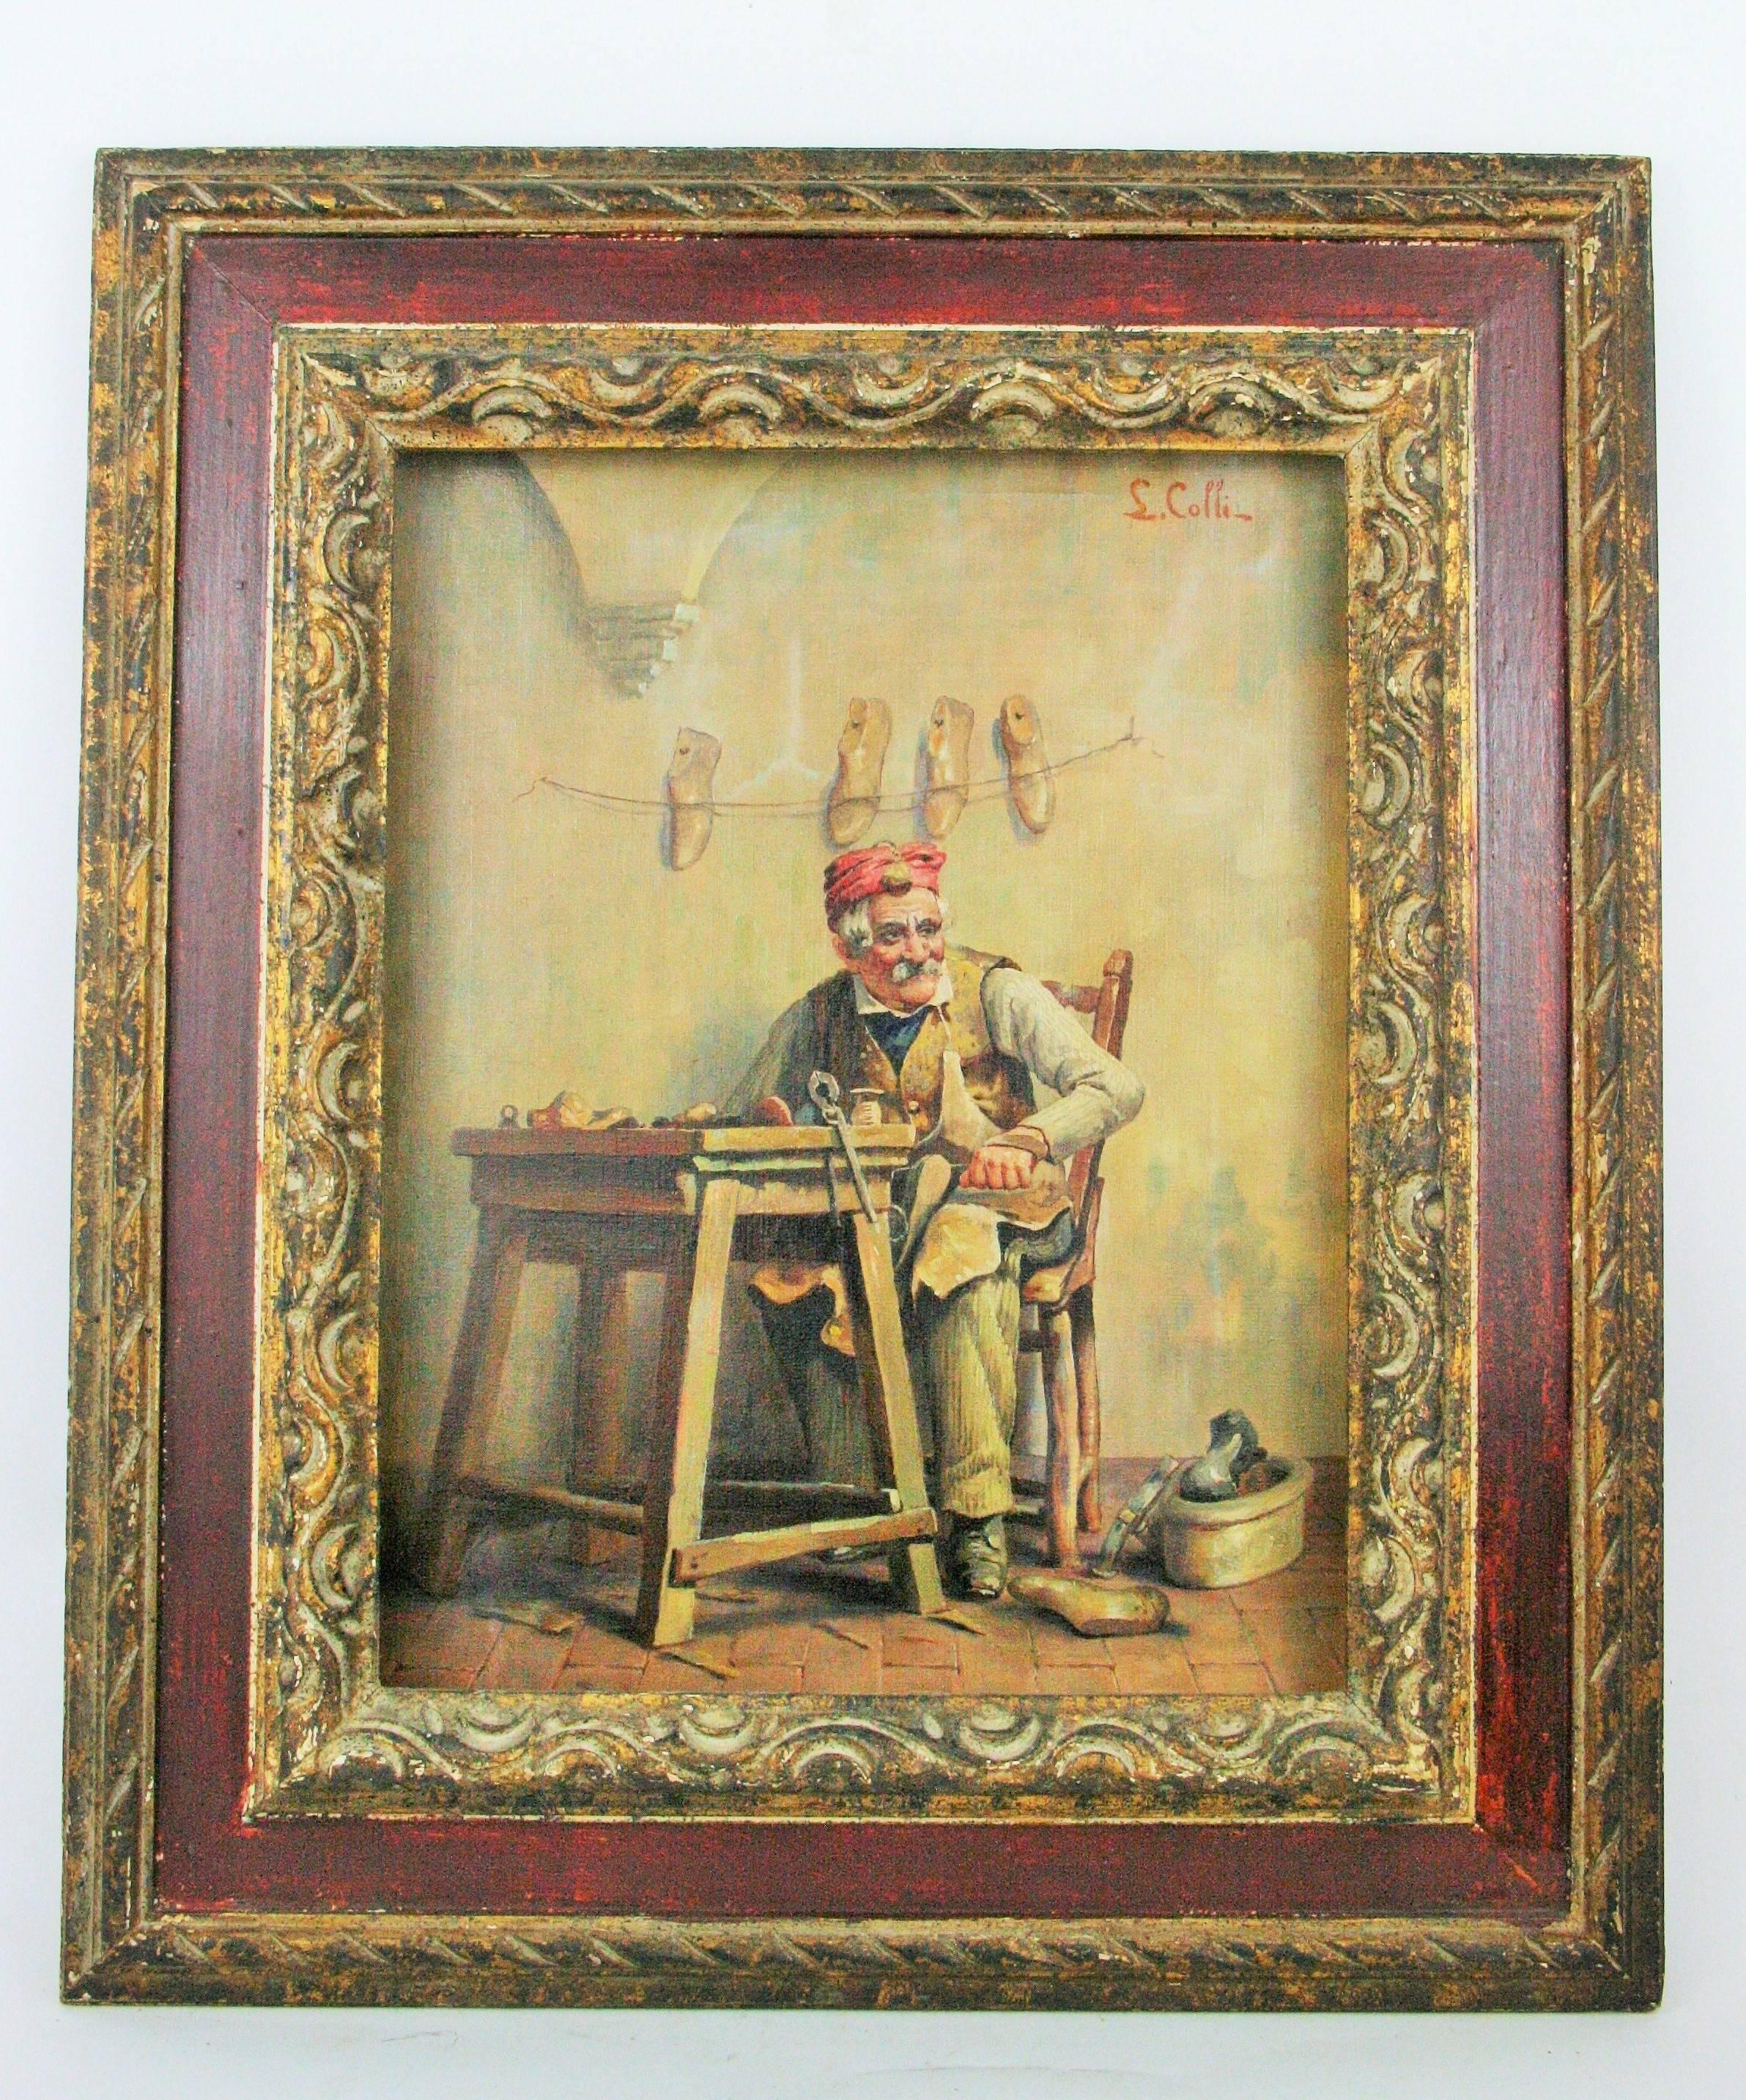  Antique  Italian Cobbler Figurative Oil Painting  by L. Colli 1920